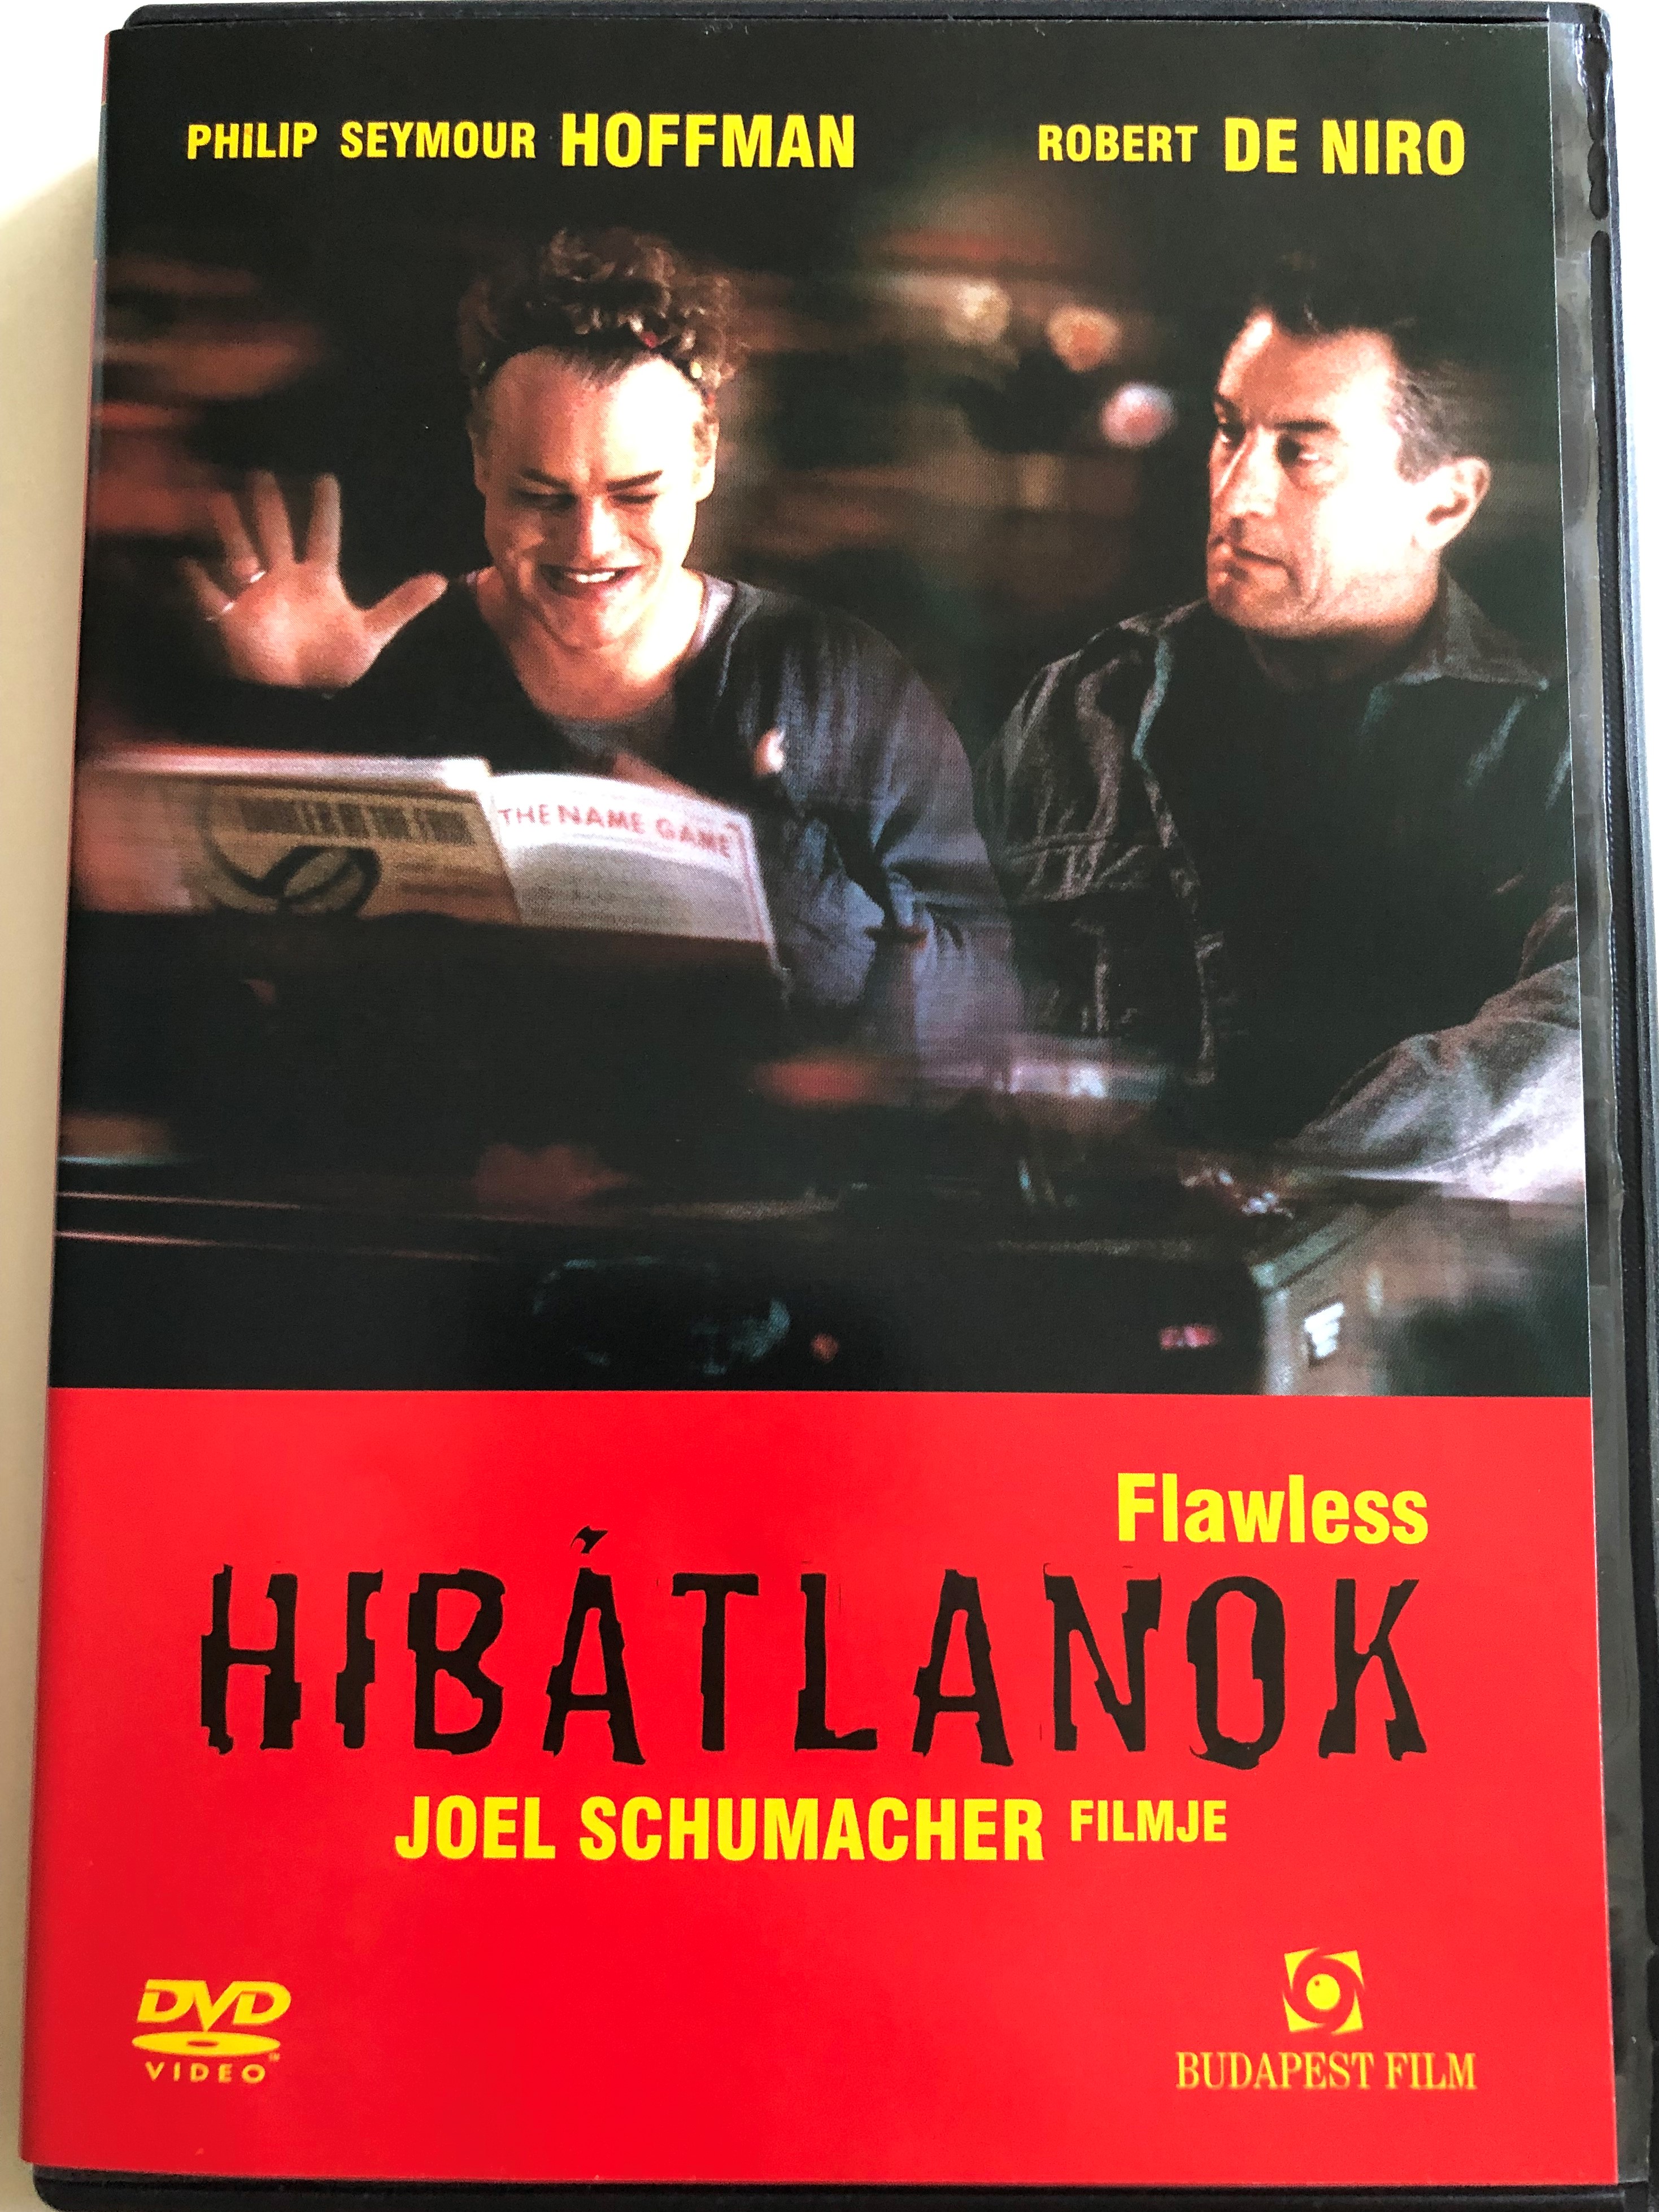 flawless-dvd-1999-hib-tlanok-directed-by-joel-schumacher-starring-philip-seymour-hoffman-robert-de-niro-barry-miller-chris-bauer-wilson-jermaine-heredia-daphne-rubin-vega-1-.jpg